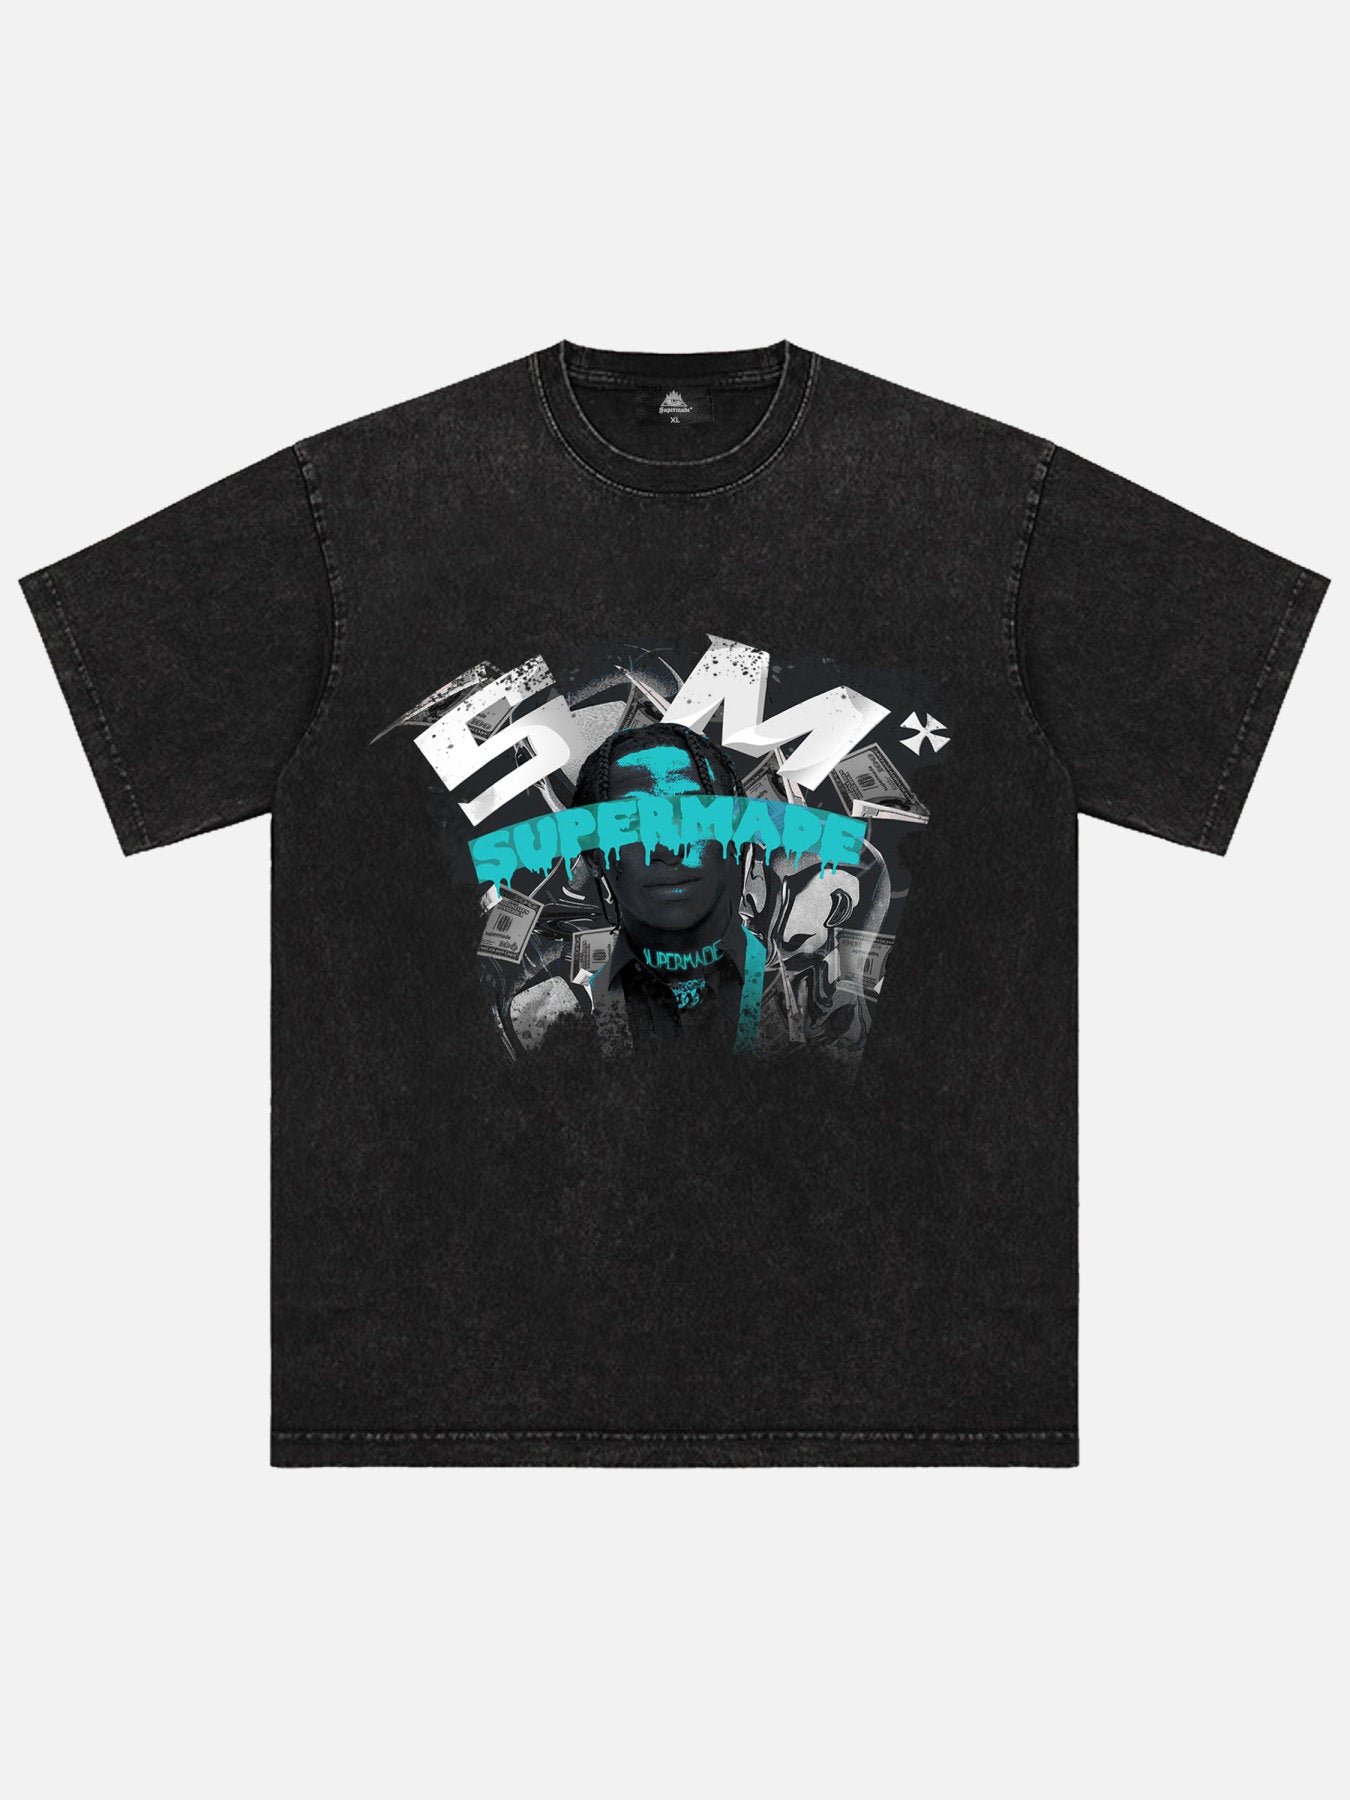 The Supermade Rap Element Print T-Shirt